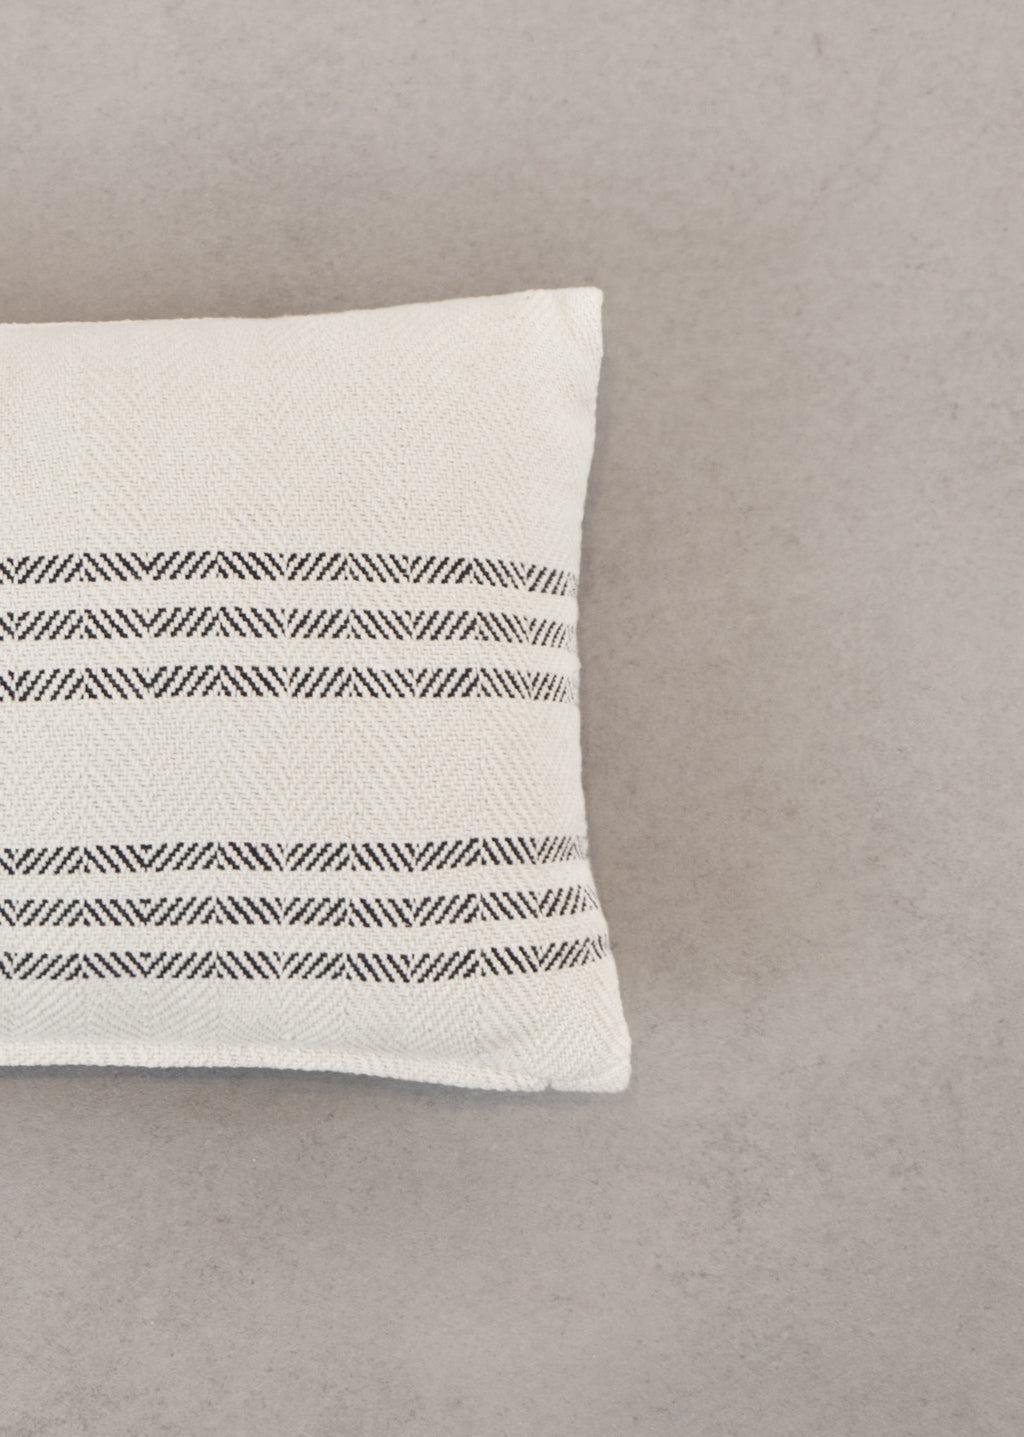 Vintage Stripes Pillow Cover